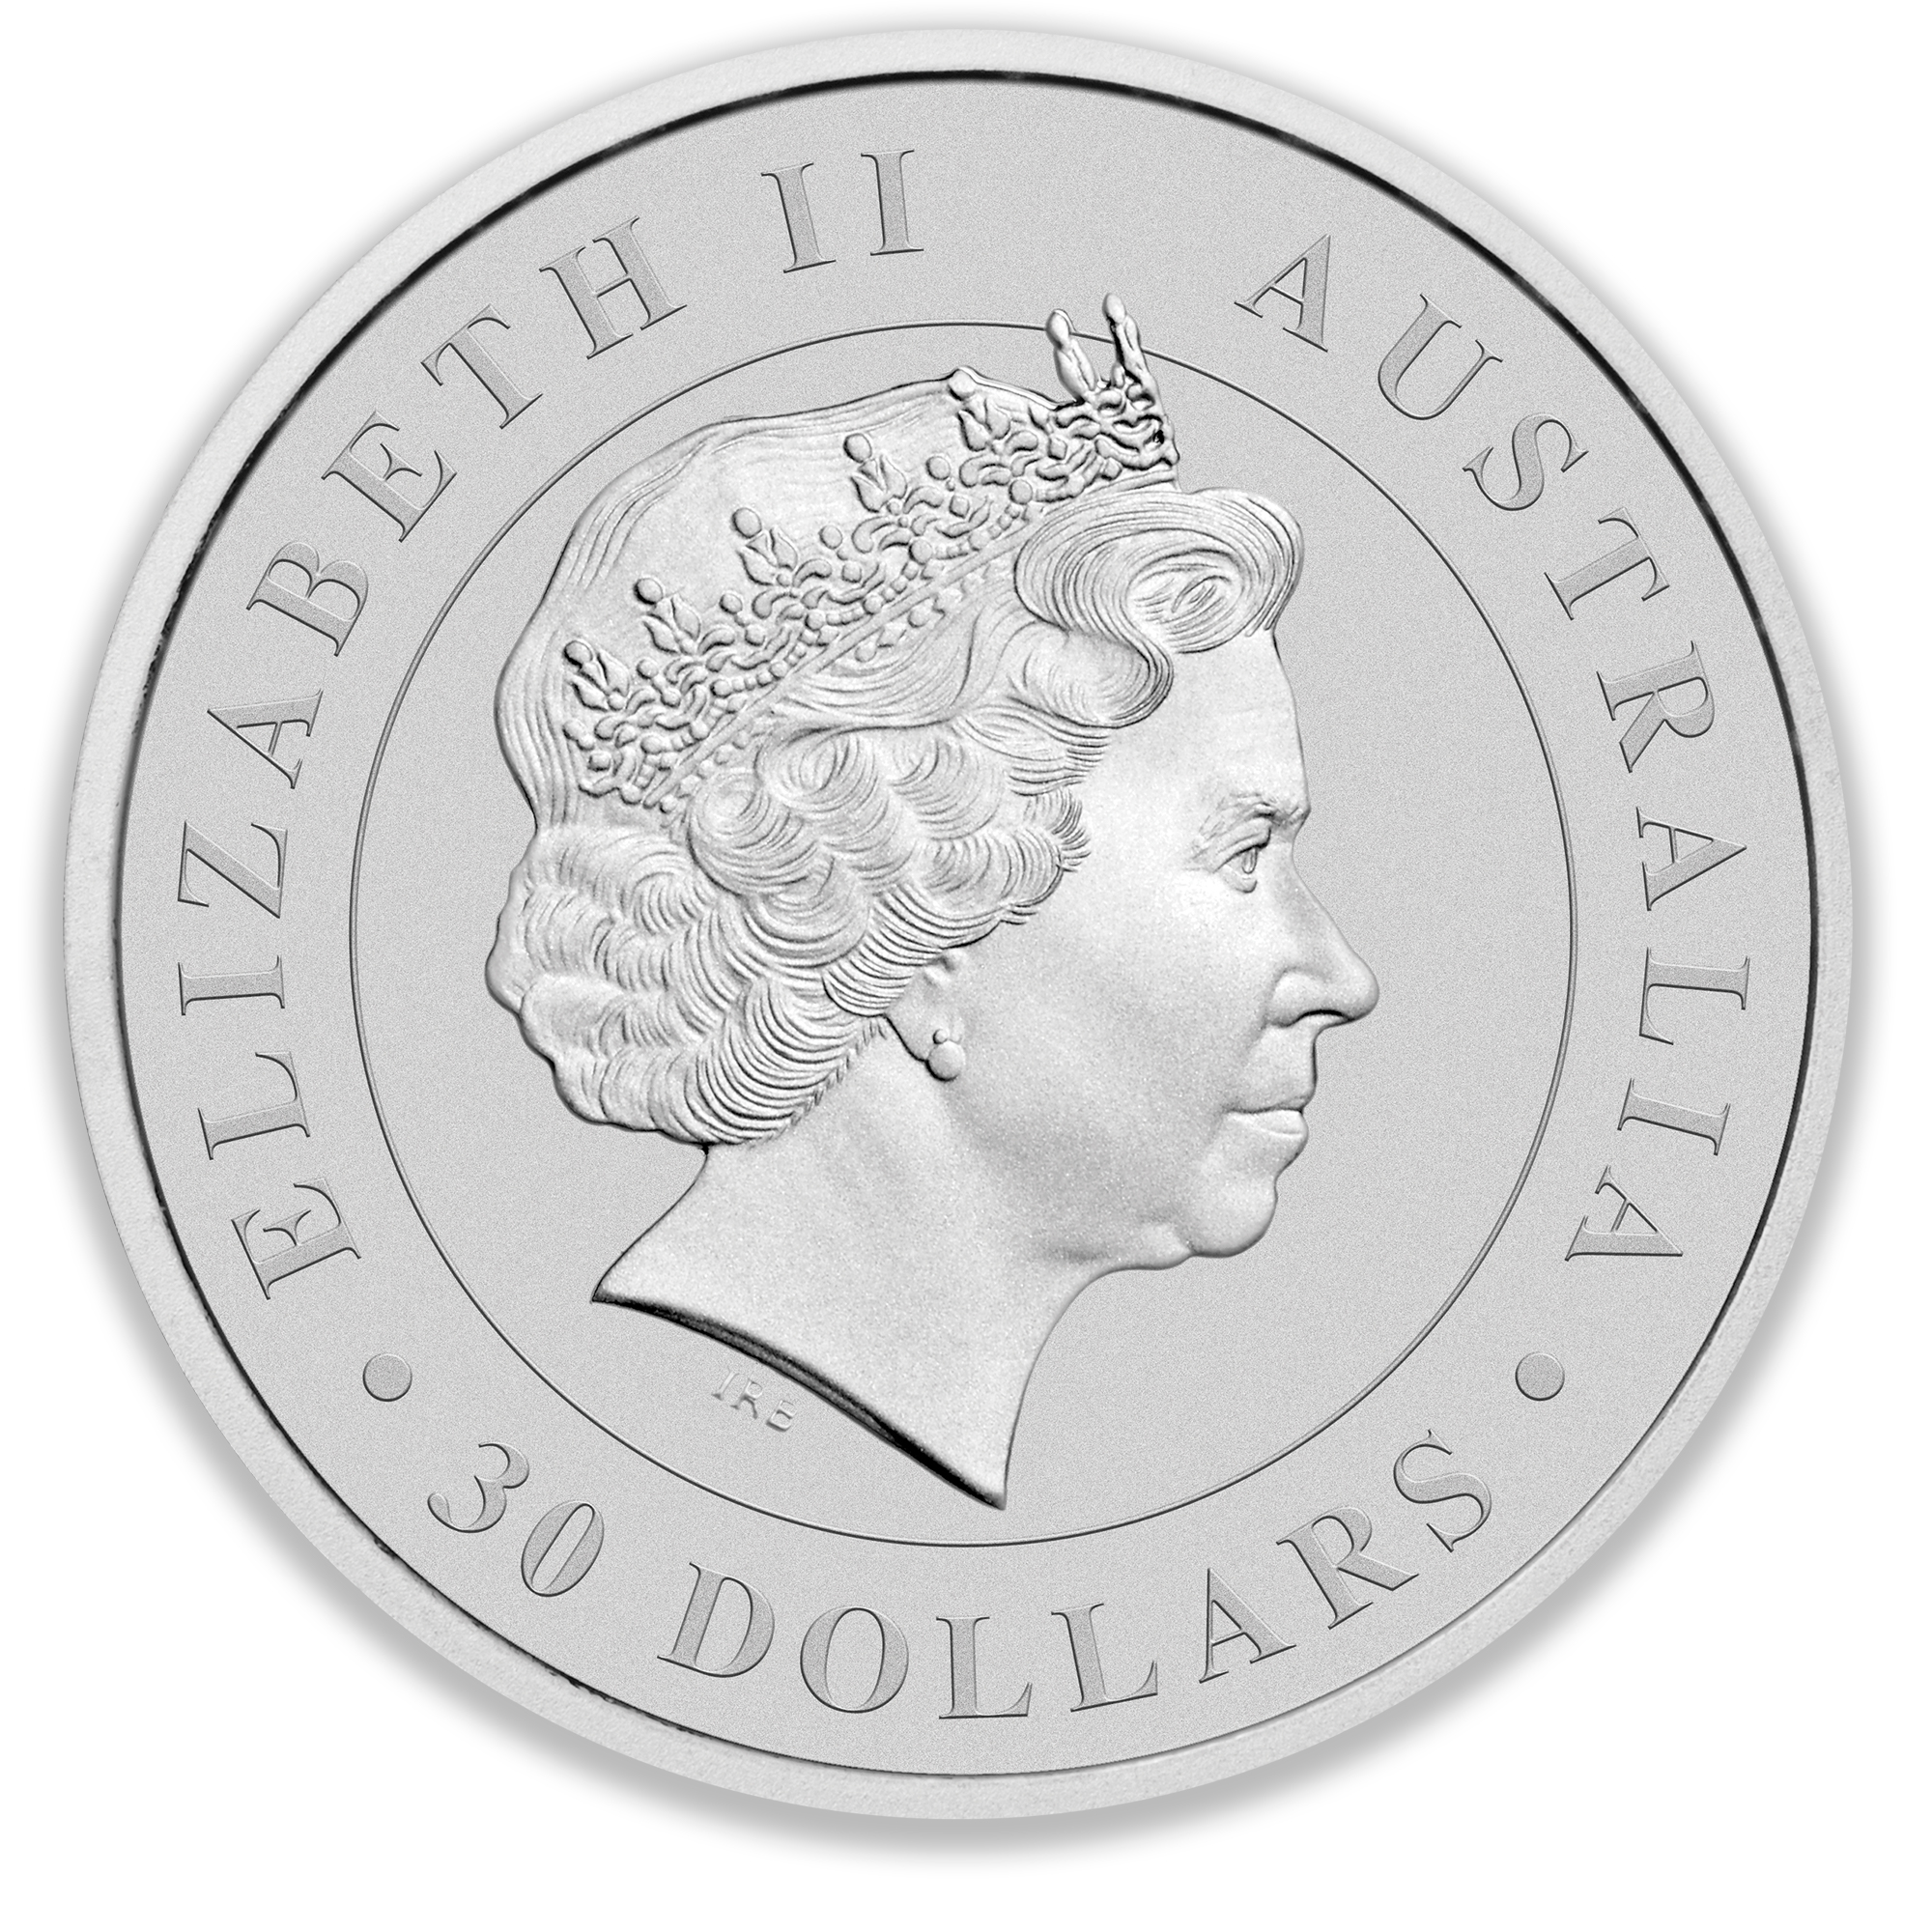 2018 1KG Perth Mint Silver Koala Coin